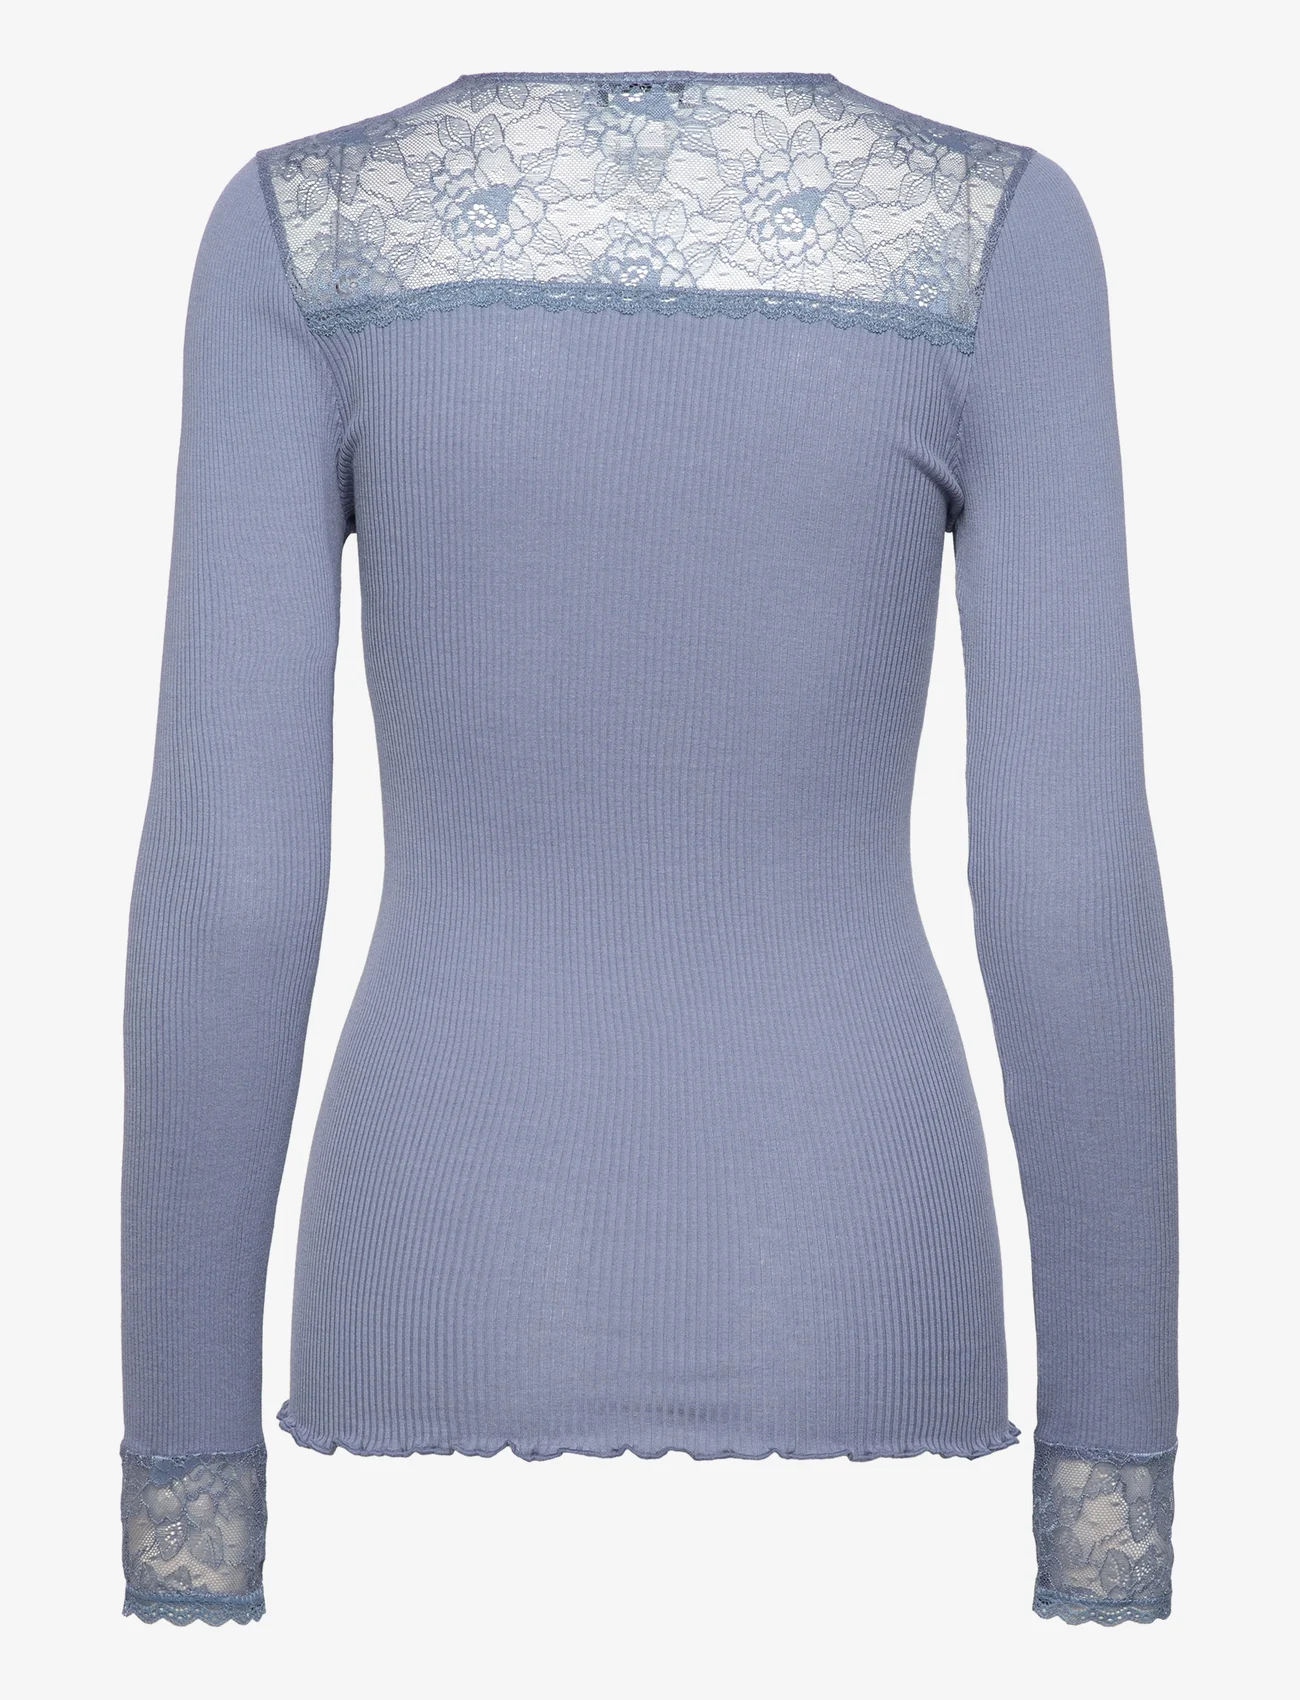 Rosemunde - Silk t-shirt regular LS w/lace - långärmade toppar - paris blue - 1